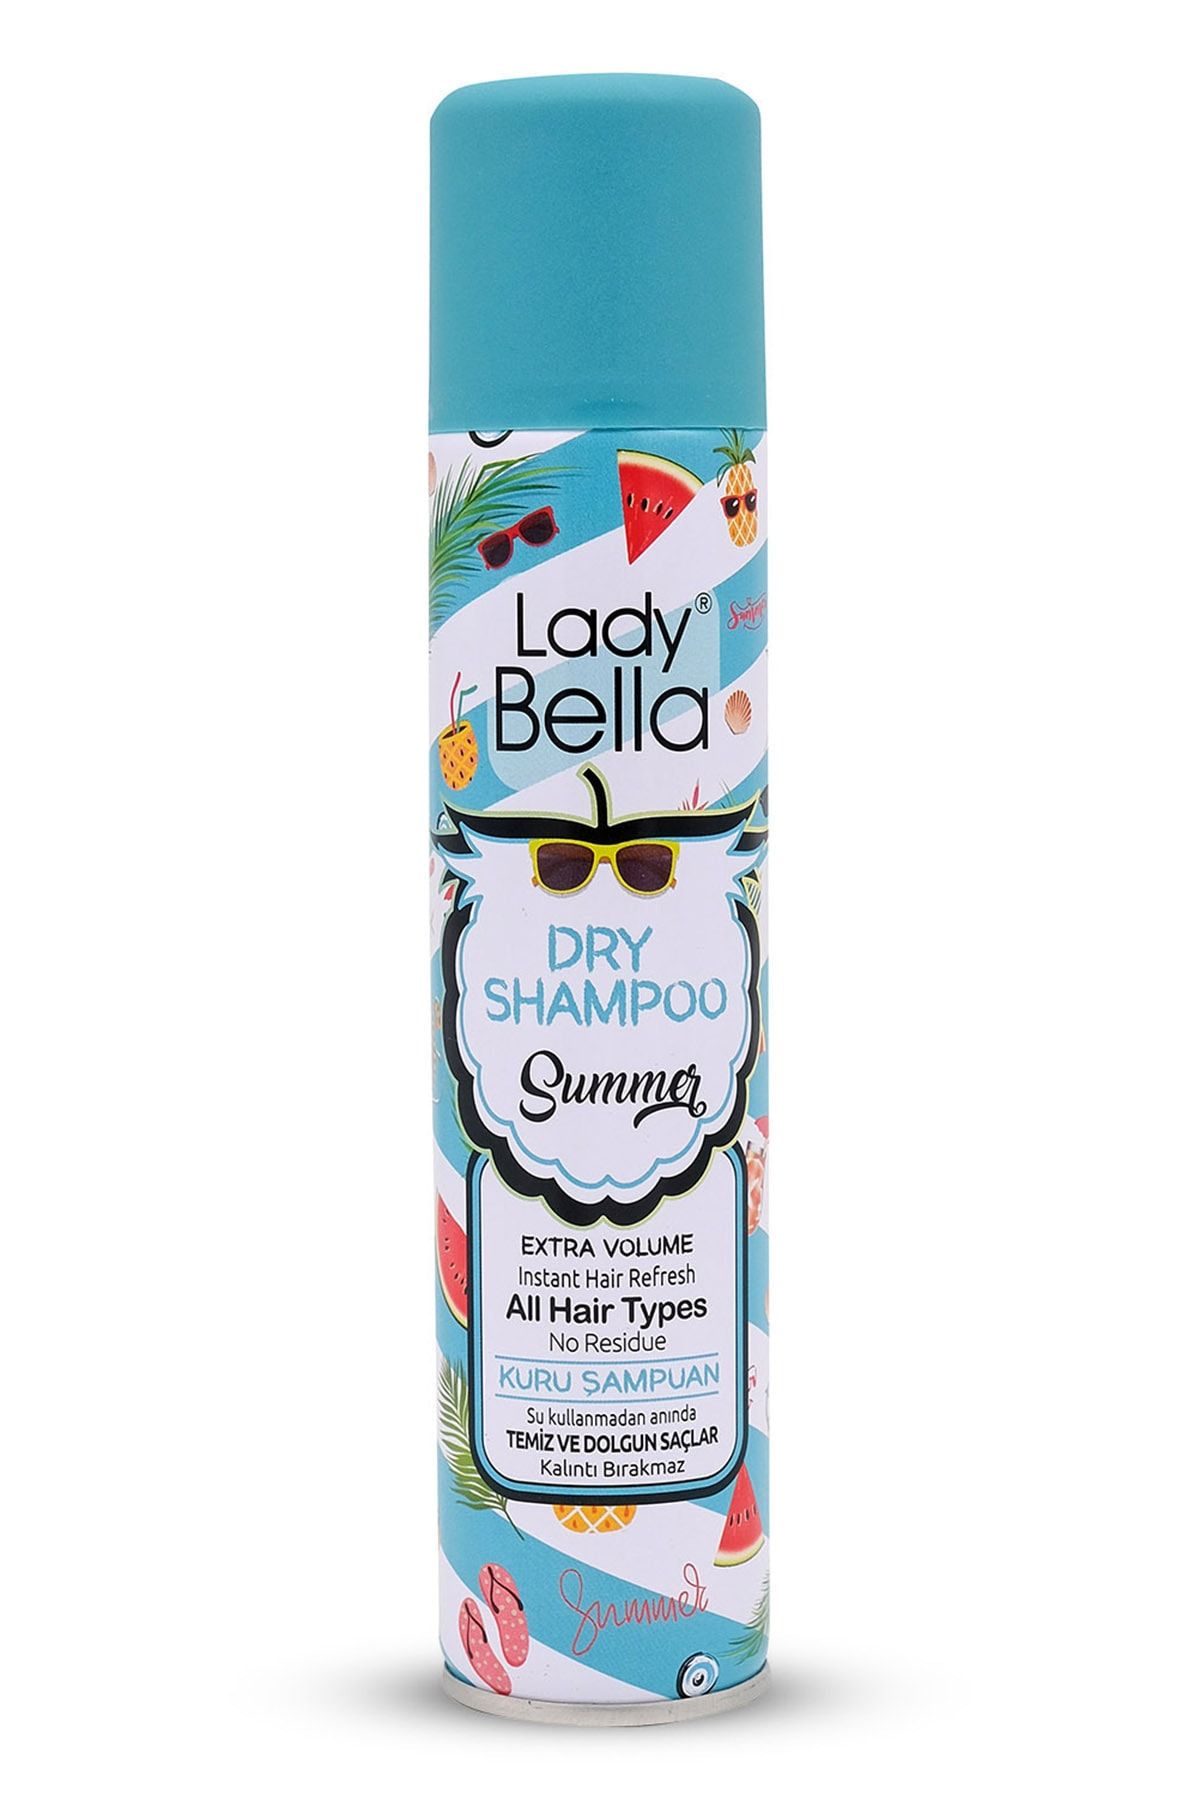 Lady Bella Kuru Şampuan Summer 200 Ml